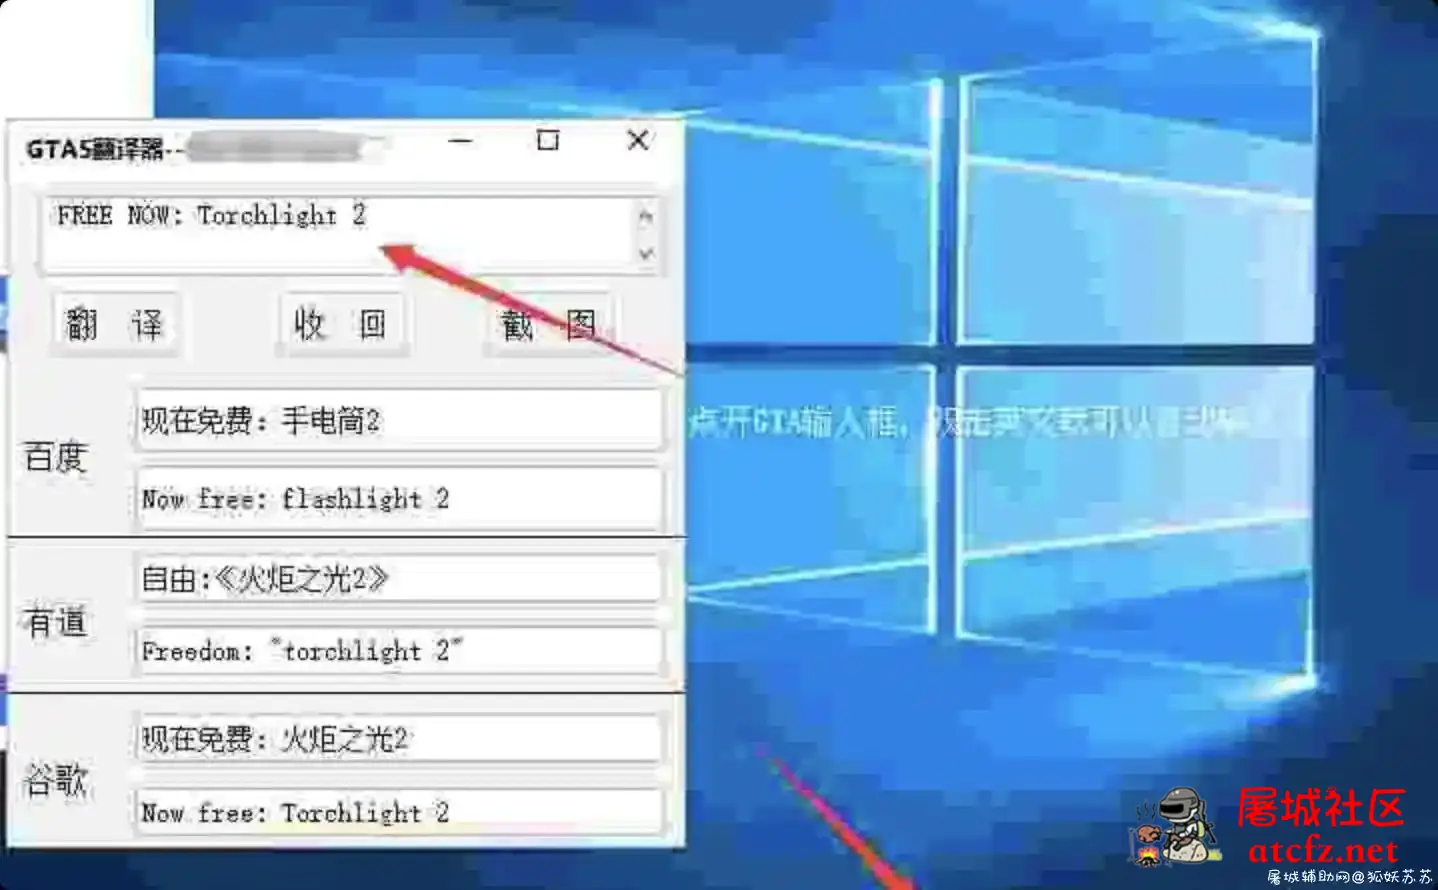 GTA5自动翻译器 自动输入内容 v0.3 新增搜狗翻译 屠城辅助网www.tcfz1.com9300